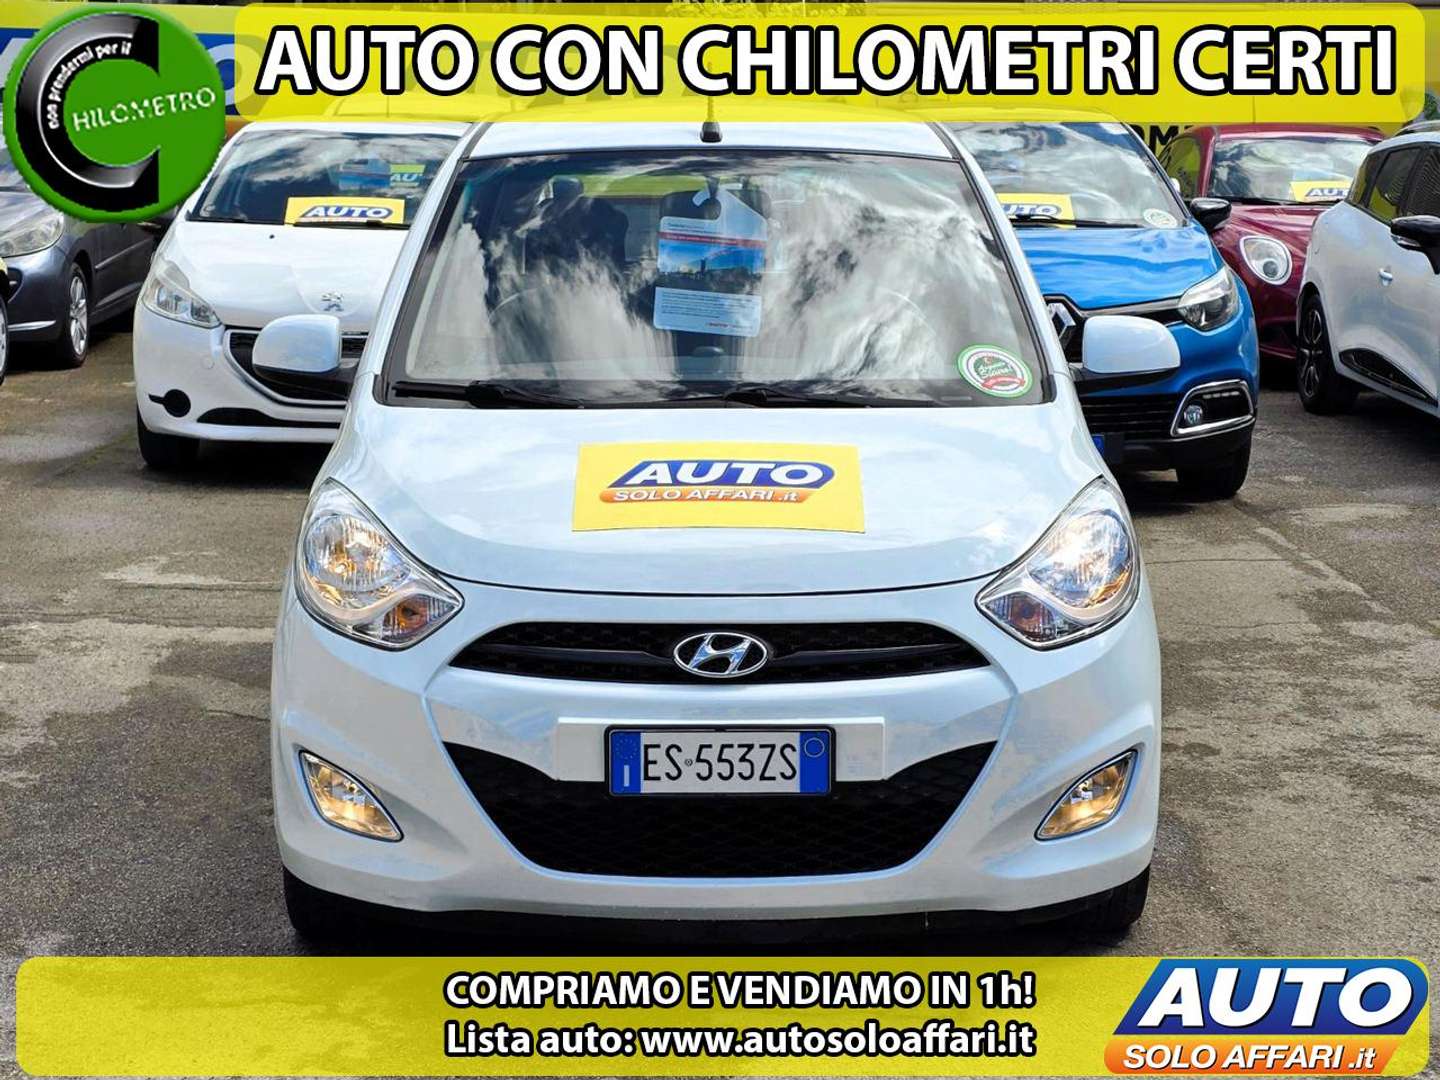 Hyundai i10 usata a Prato per € 5.850,-